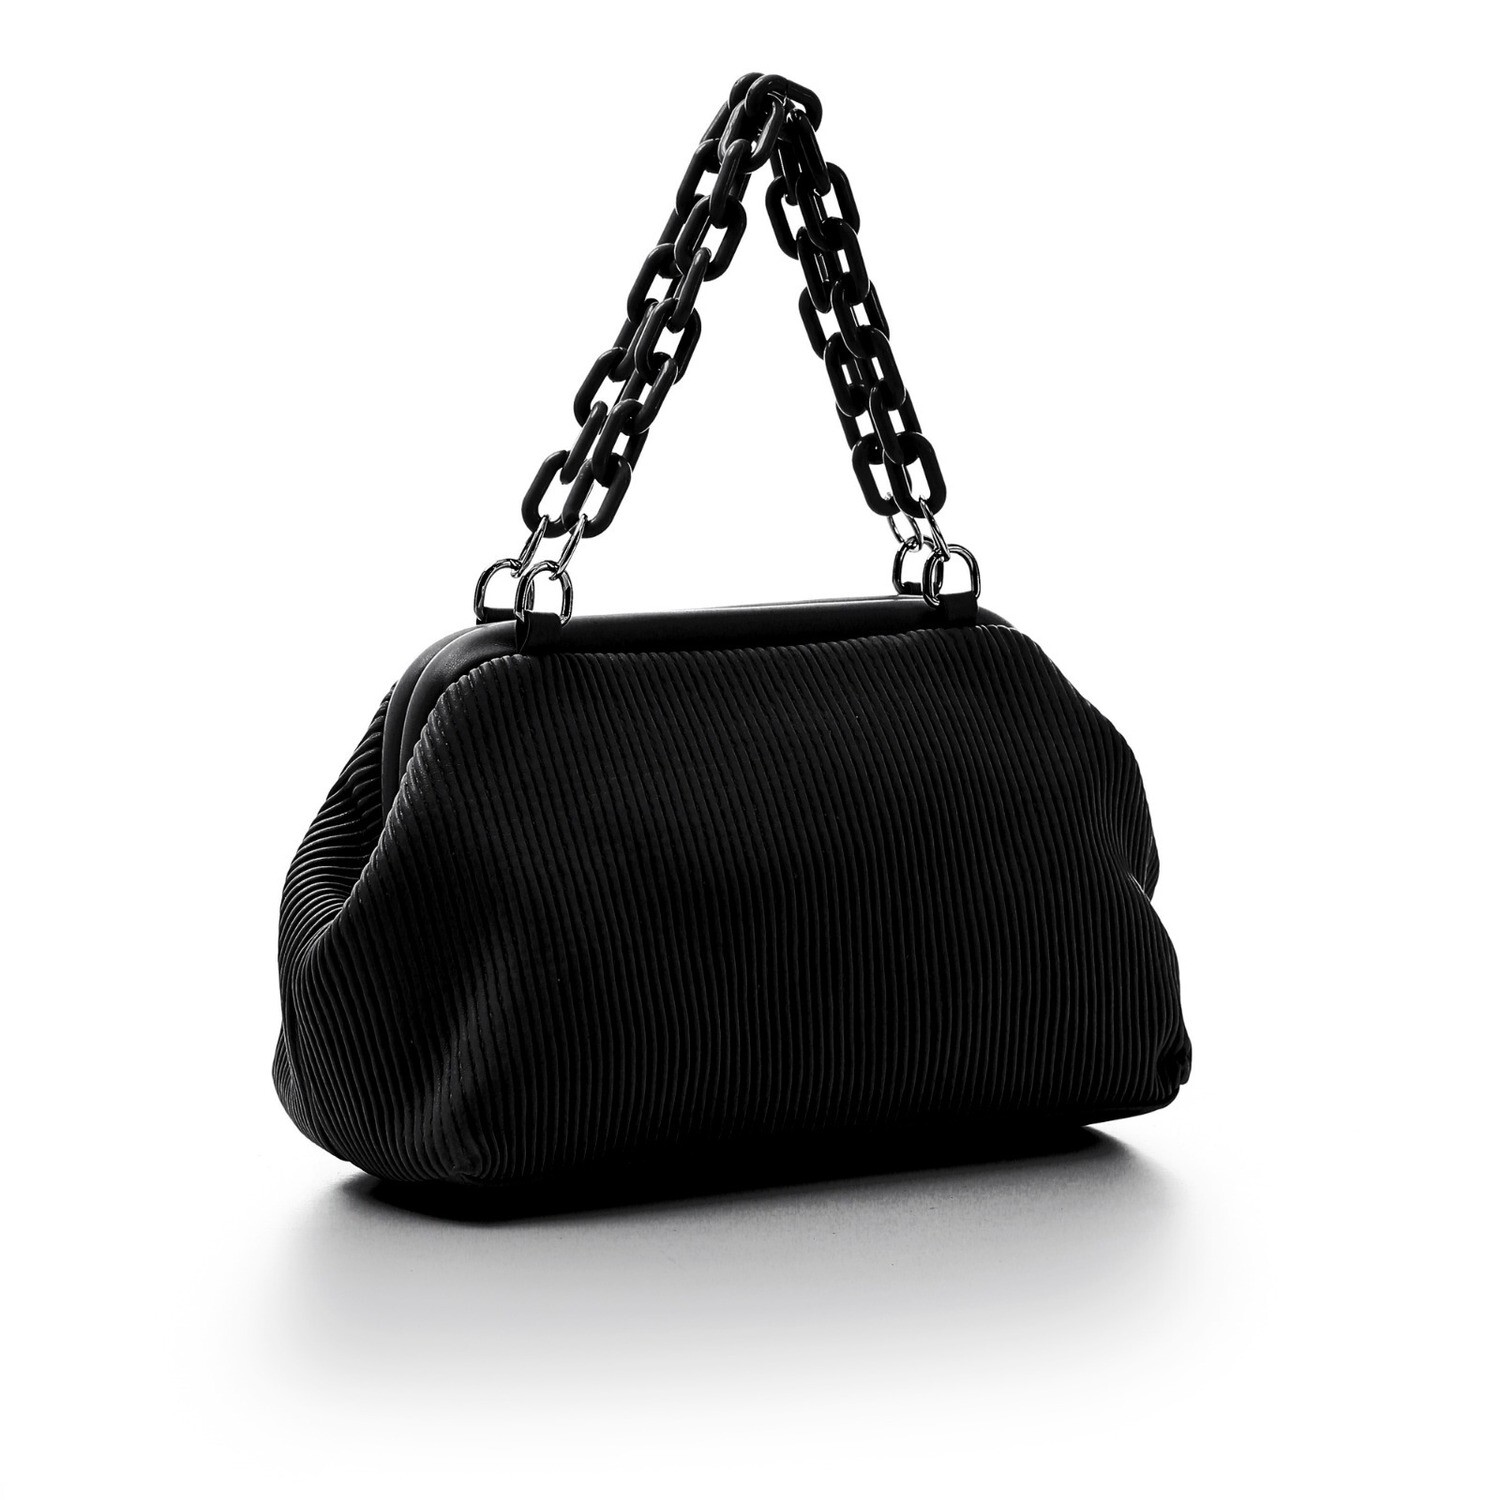 Ribbed Leather Fashionable Handbag - Black-4981